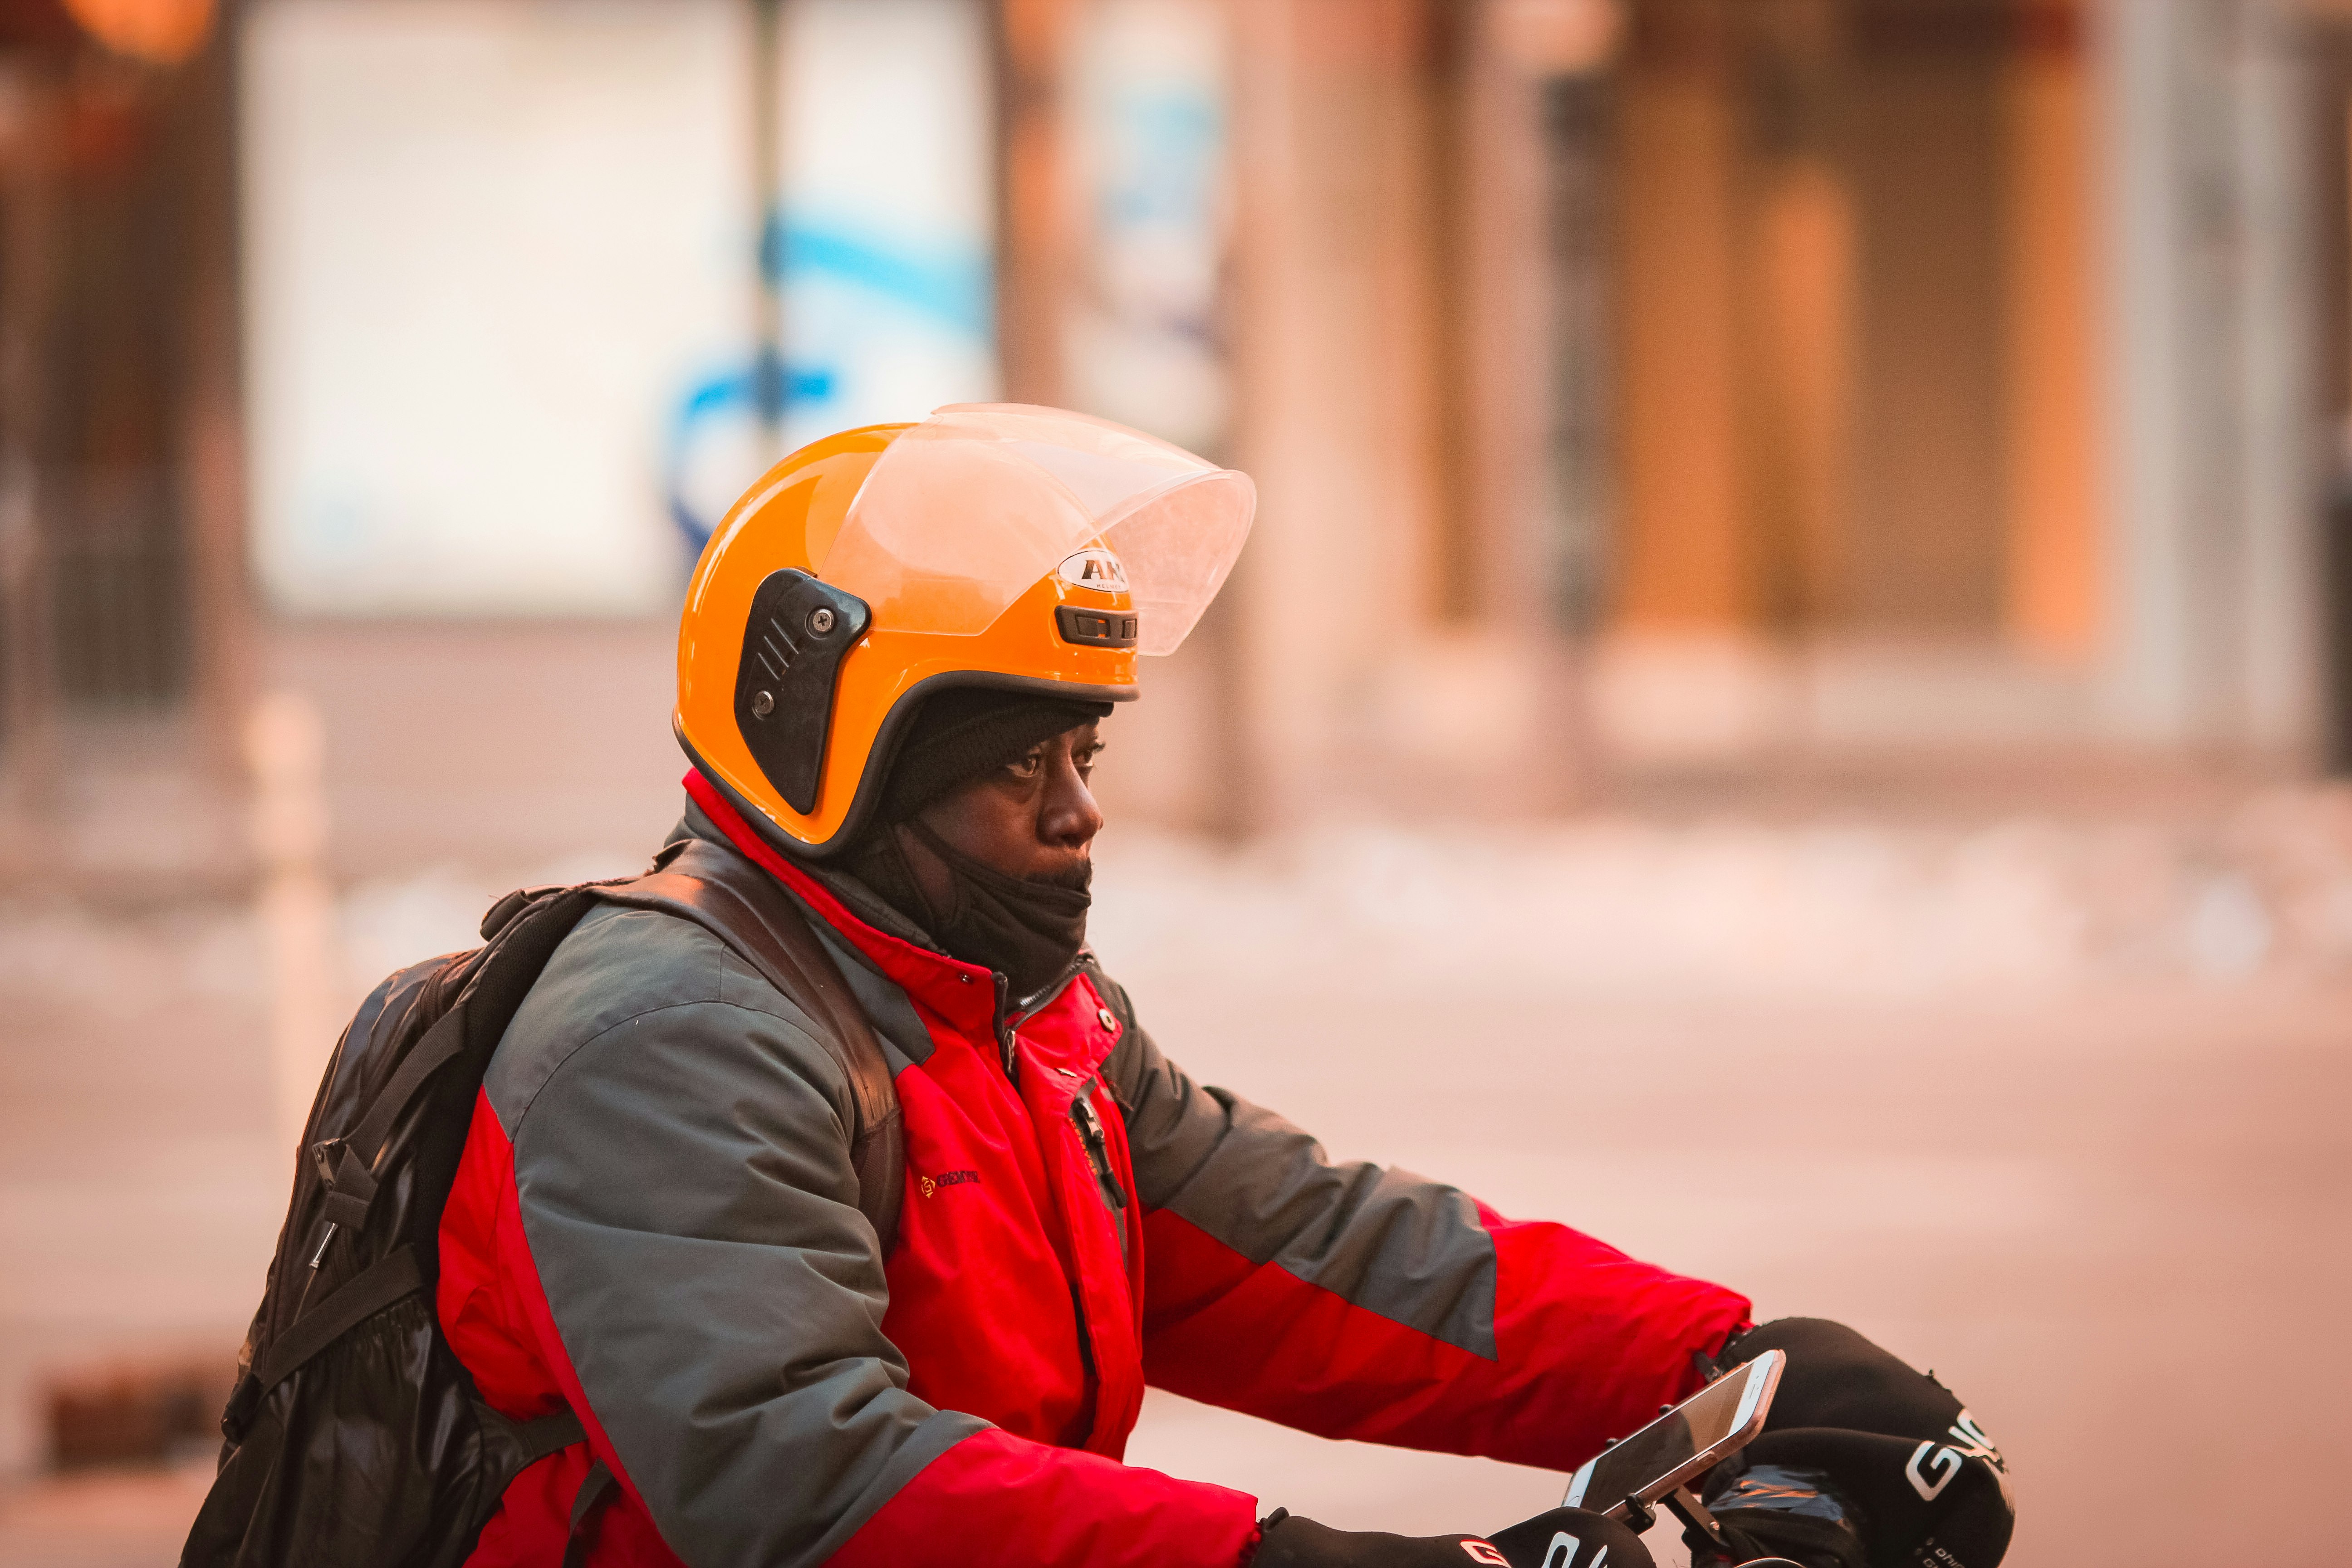 man in red and black jacket wearing orange helmet riding on motorcycle during daytime